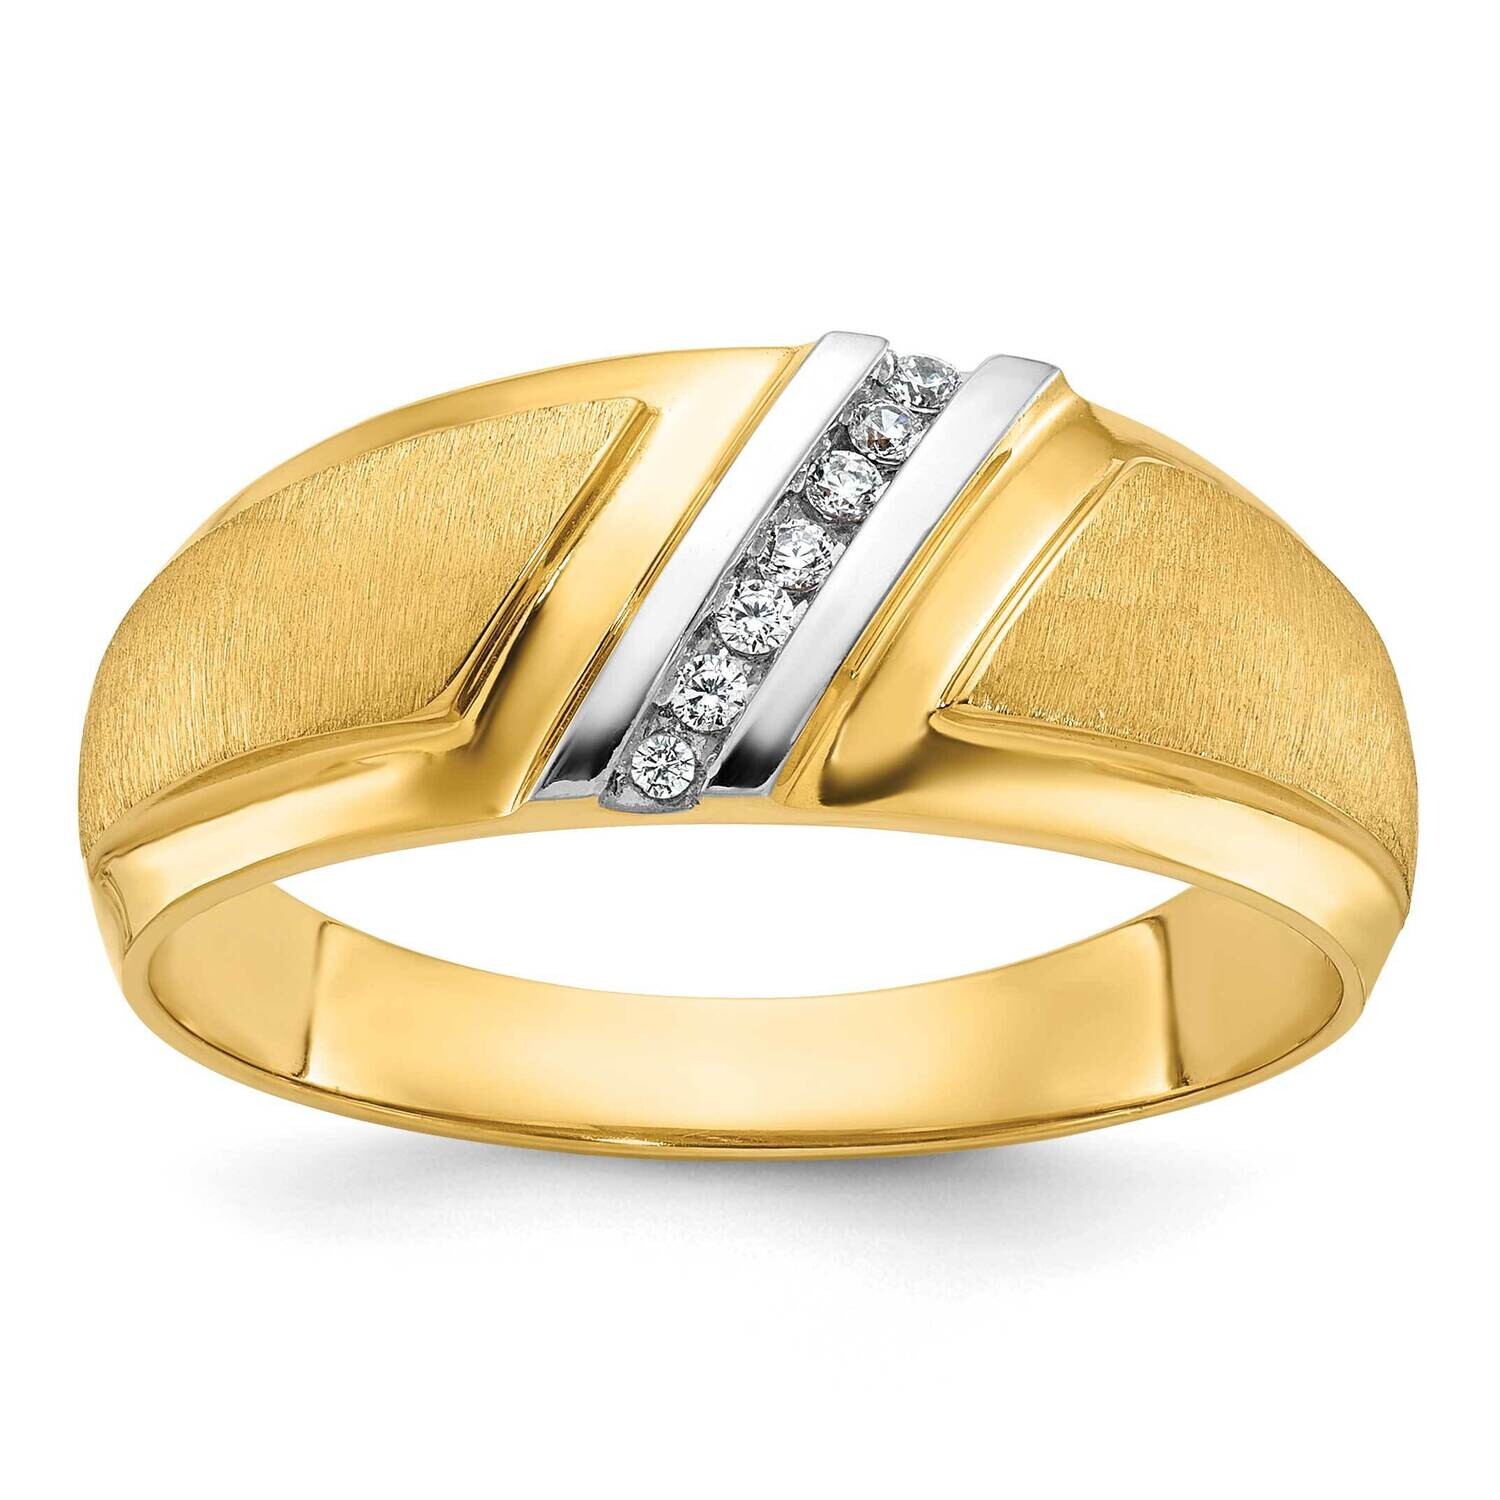 Ibgoodman Men's Polished Satin 1/20 Carat Aa Quality Diamond Ring 14k Gold White Rhodium B64191-4YAA